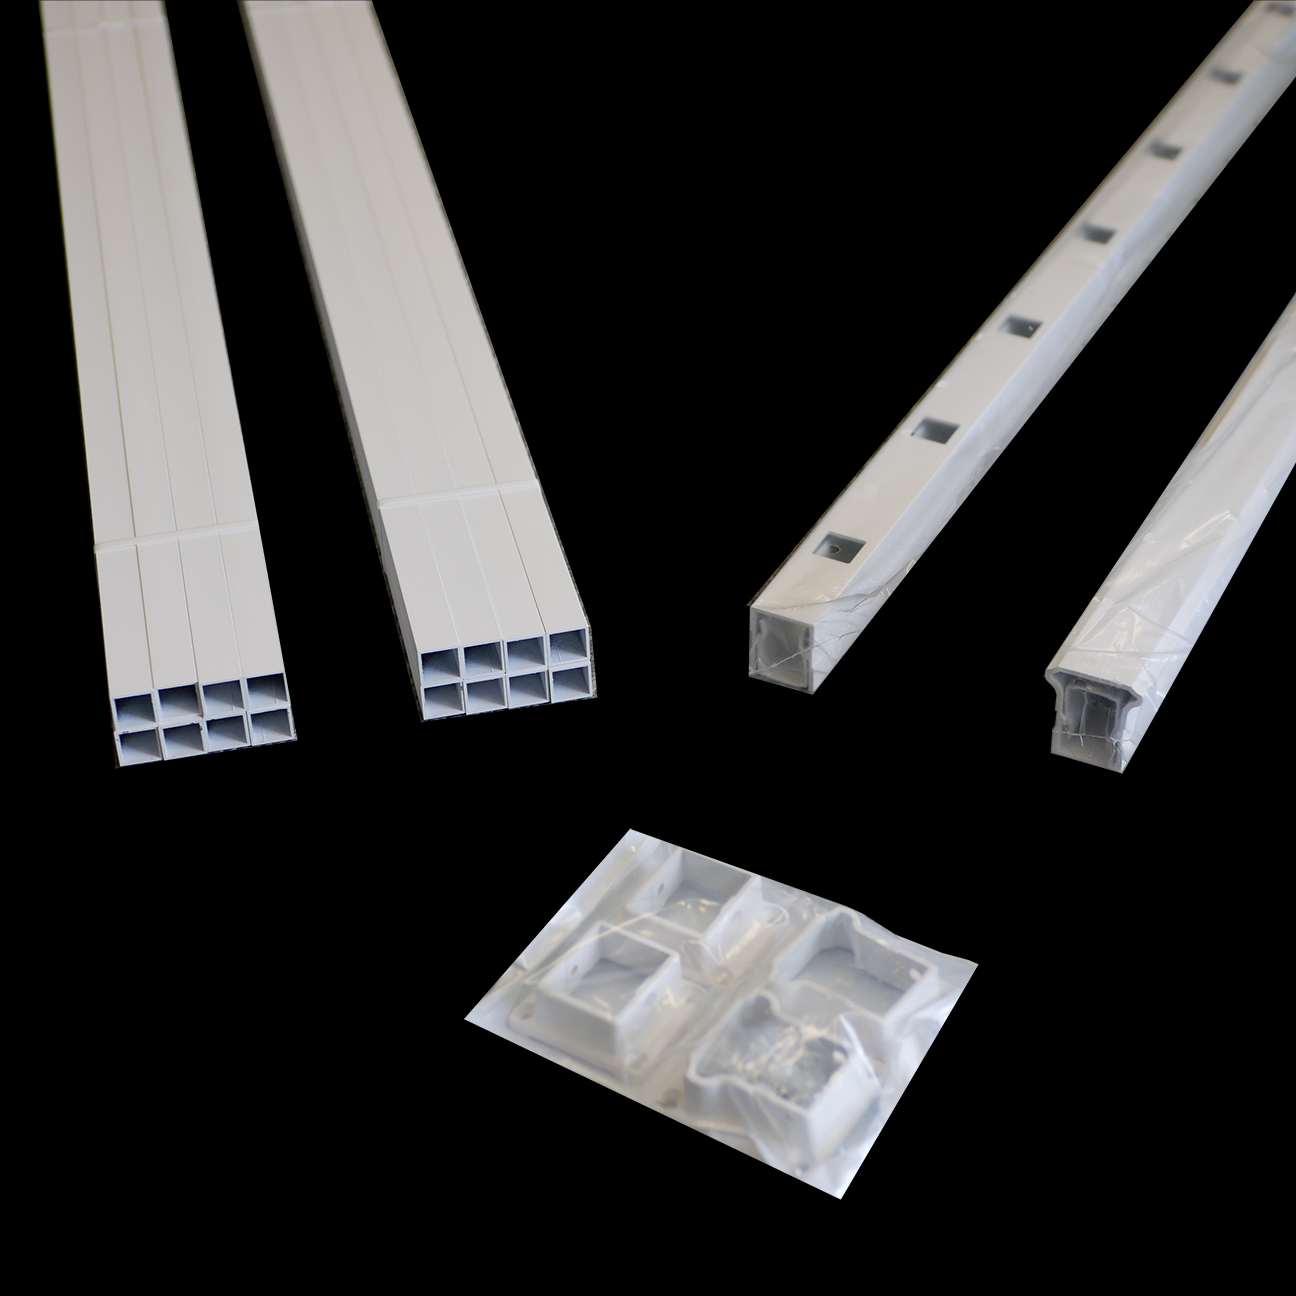 6 foot advantage white aluminum railing kit has balusters, rails, and brackets